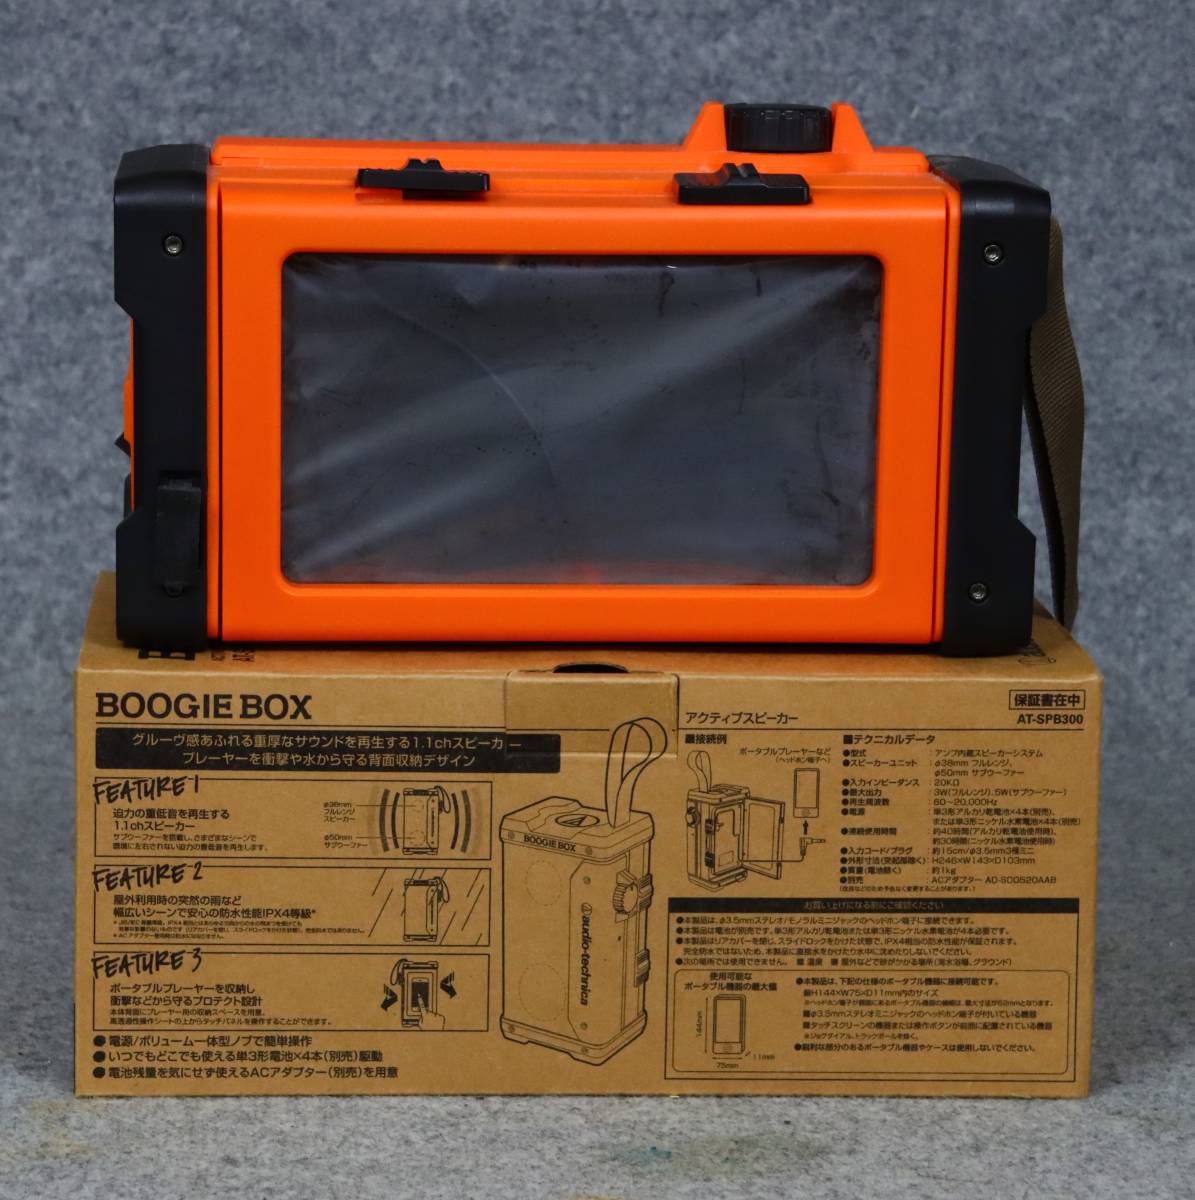  used operation beautiful goods Audio-Technica BOOGIE BOX AT-SPB300 orange color 1ch waterproof active * speaker original box * manual attaching audio * Technica 